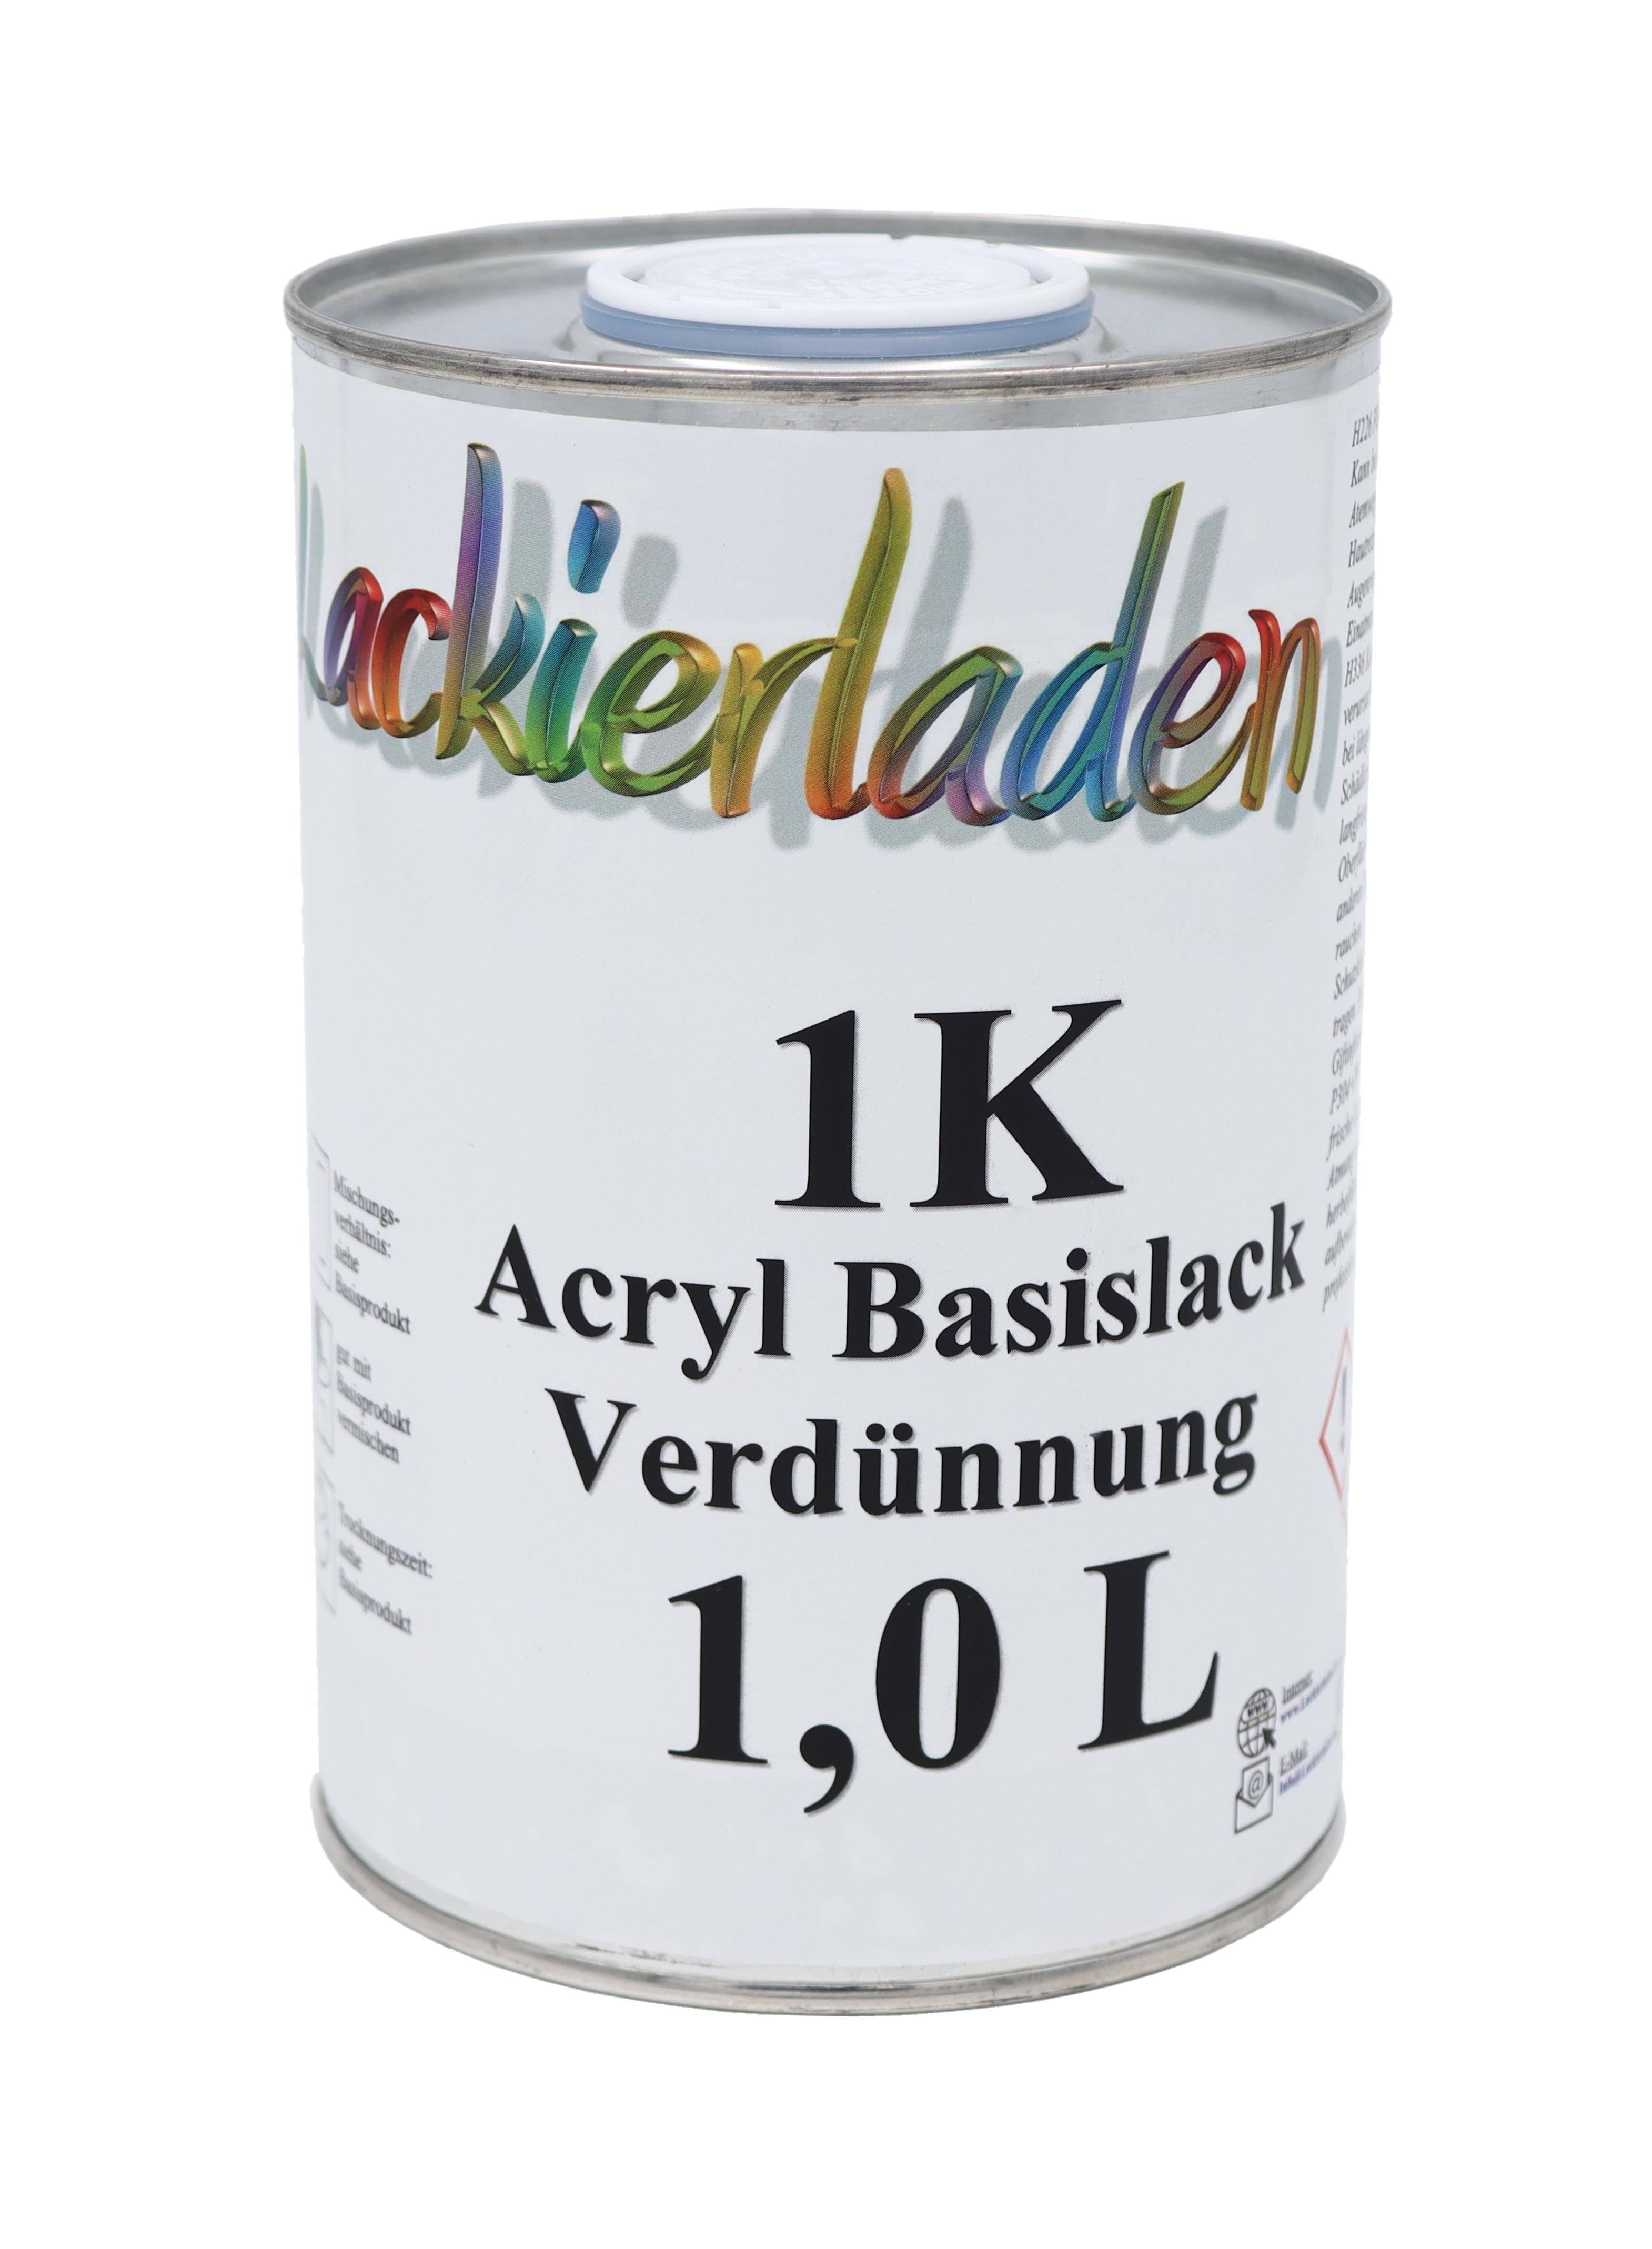 1K Acryl Basislack Verdünnung 1,0 L | verdünnen Löser Lösemittel 1000ml 1L